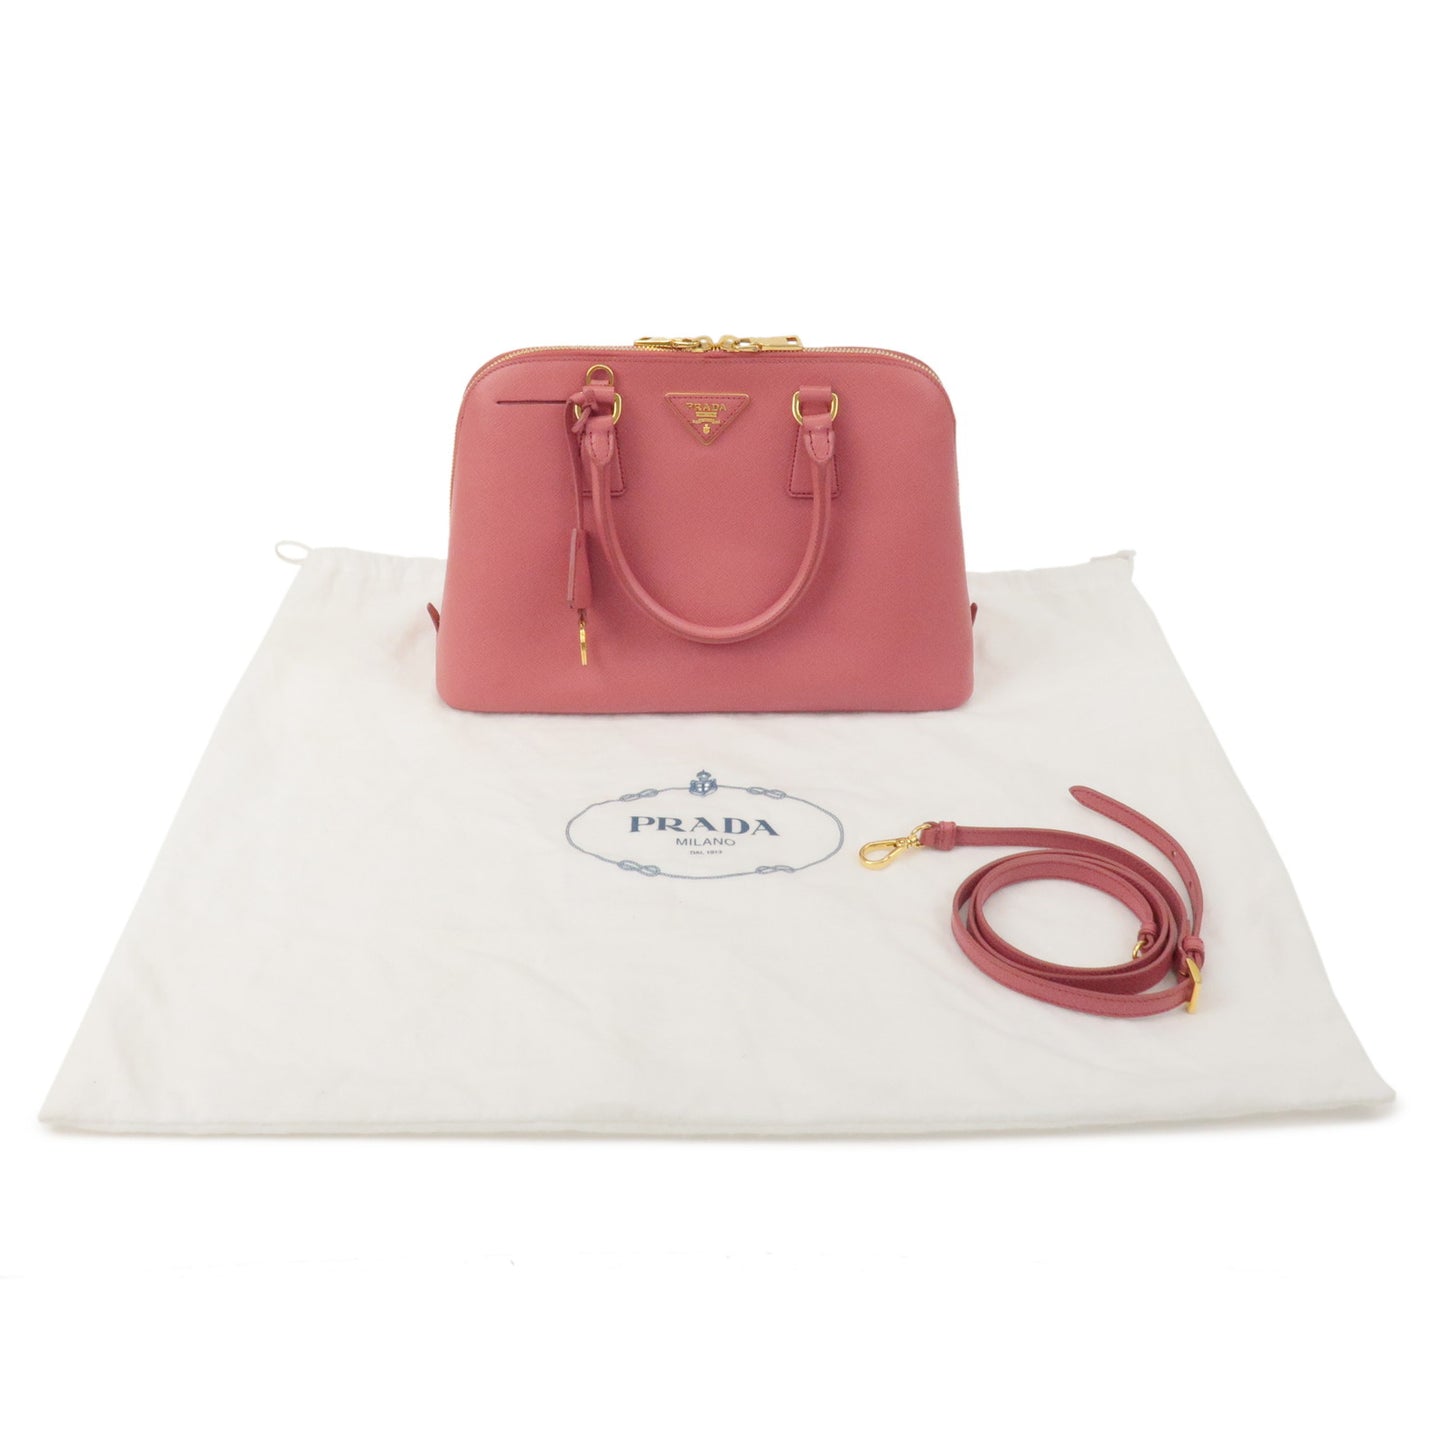 PRADA Logo Saffiano Lux Leather 2Way Bag Hand Bag Pink BL0837